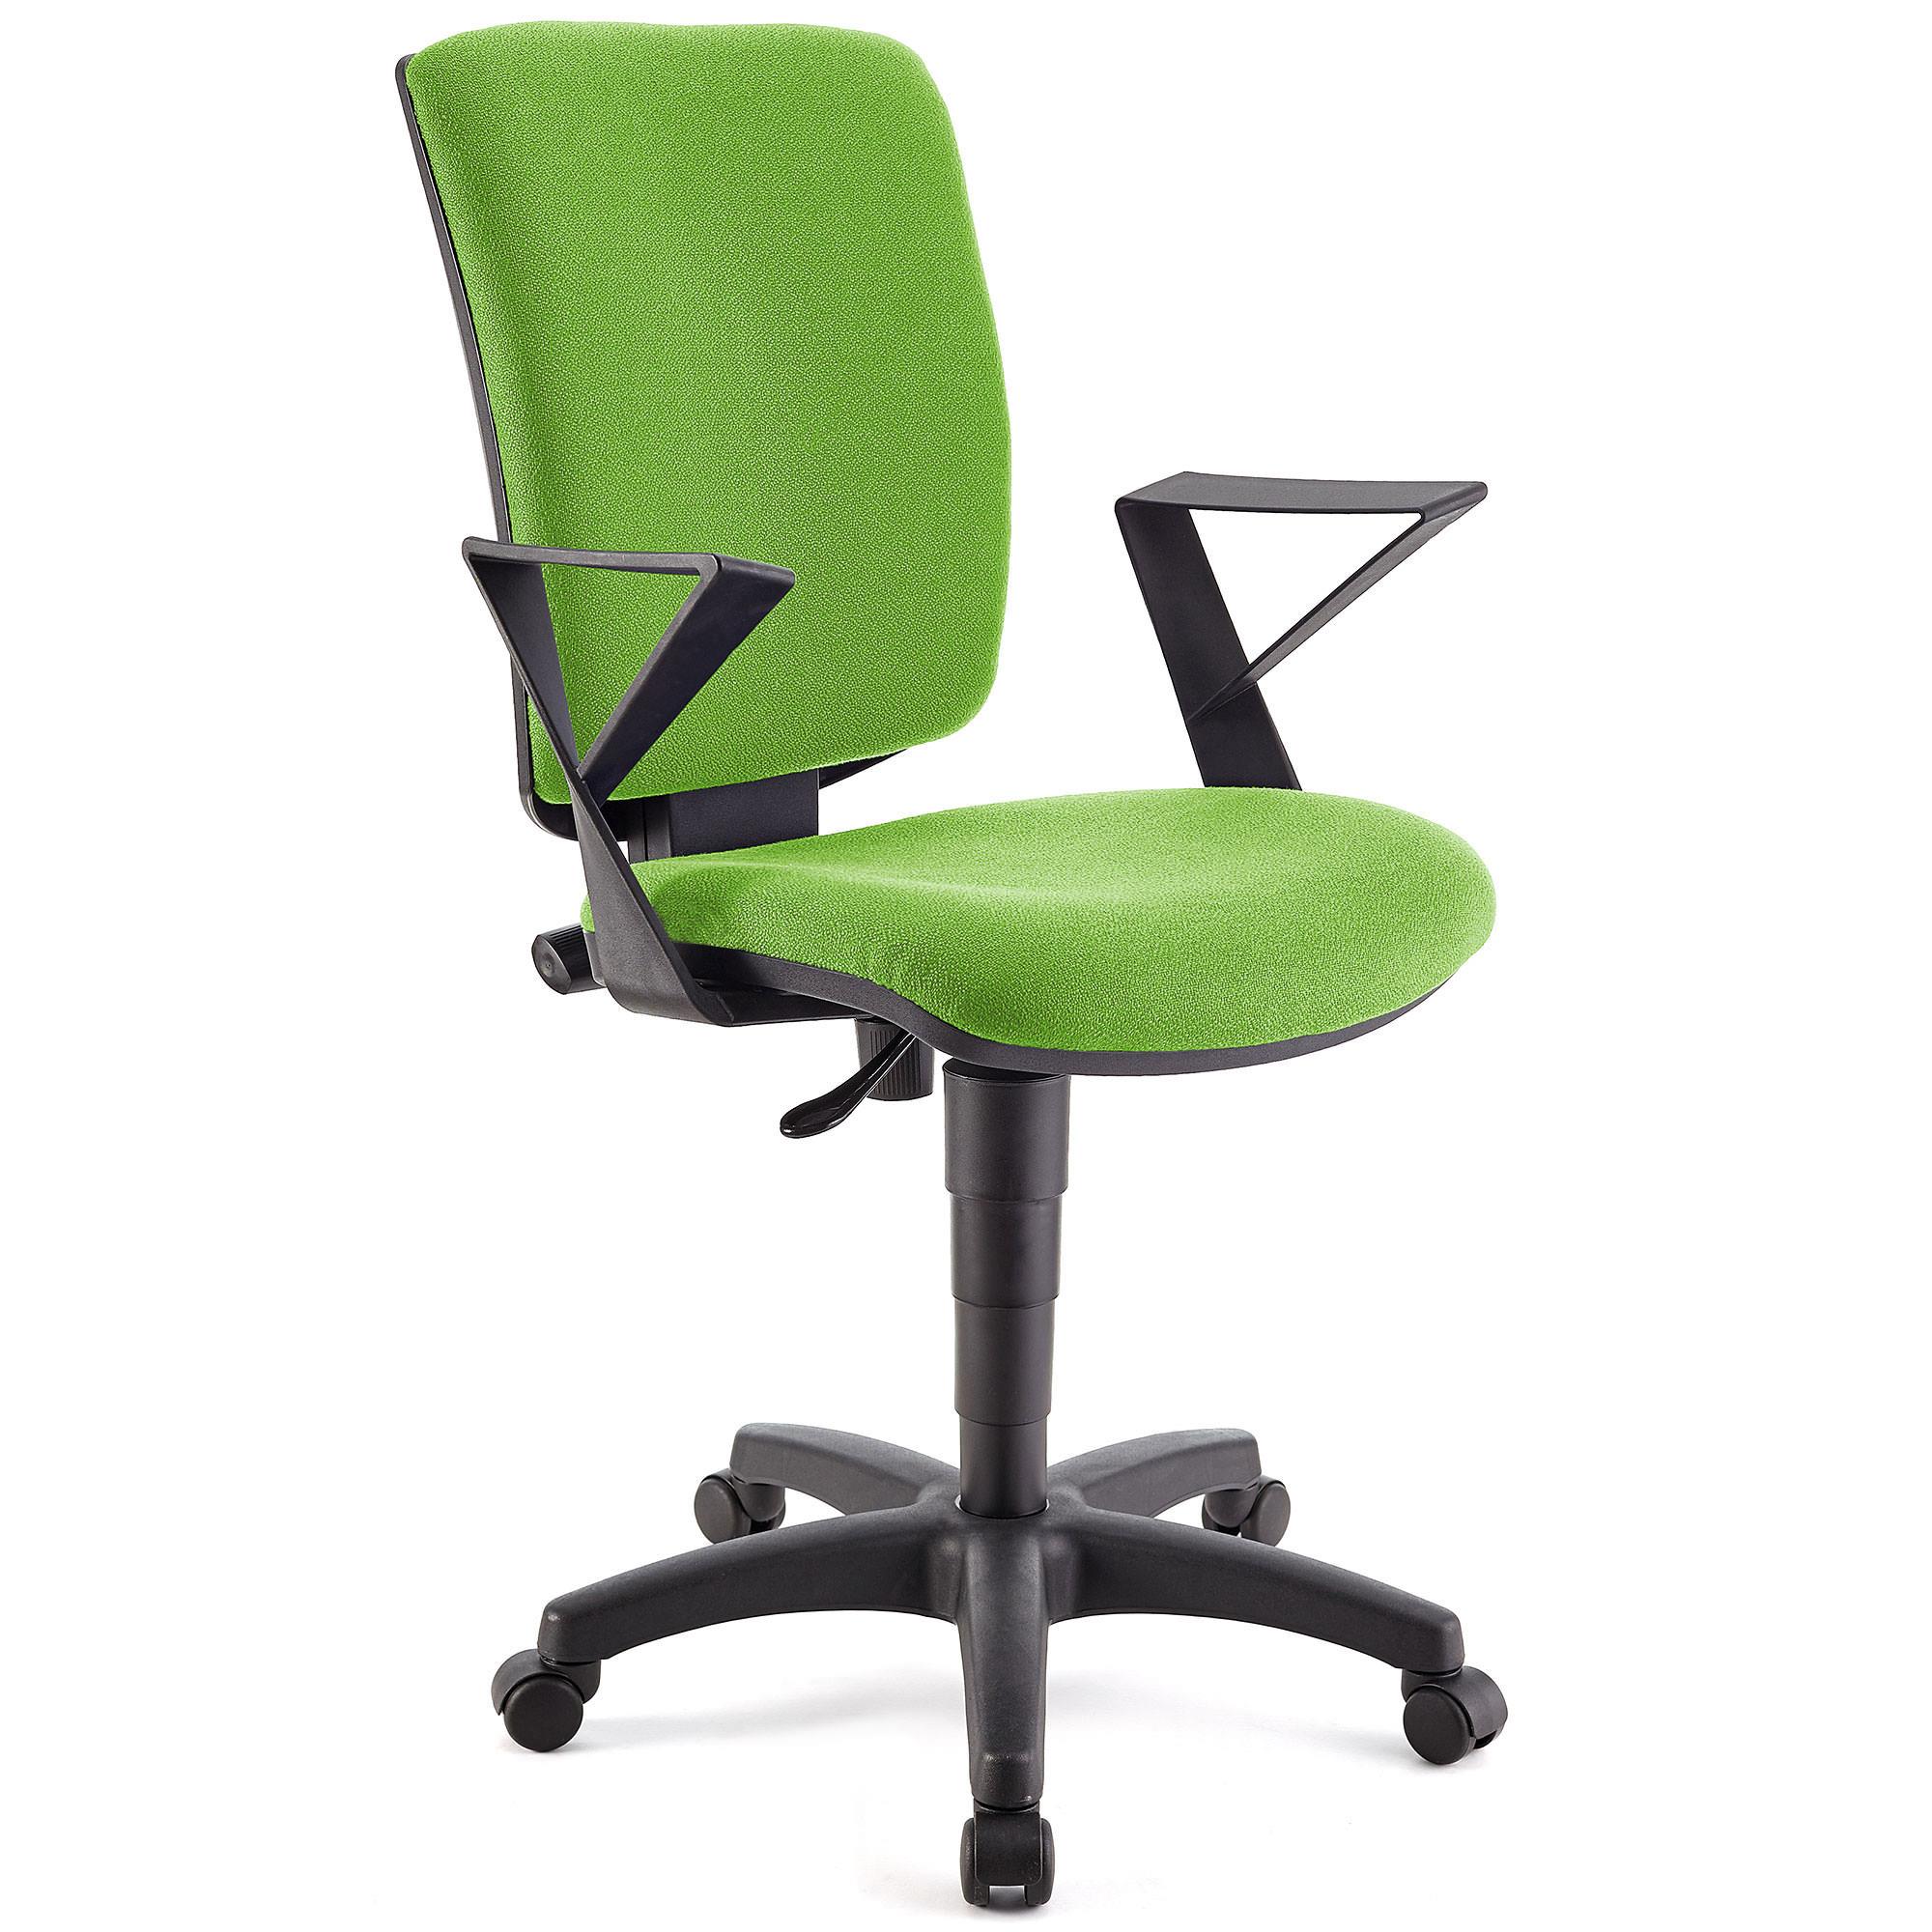 Bürostuhl ATLAS STOFF, verstellbare Rückenlehne, dicke Polsterung, Farbe Limettengrün